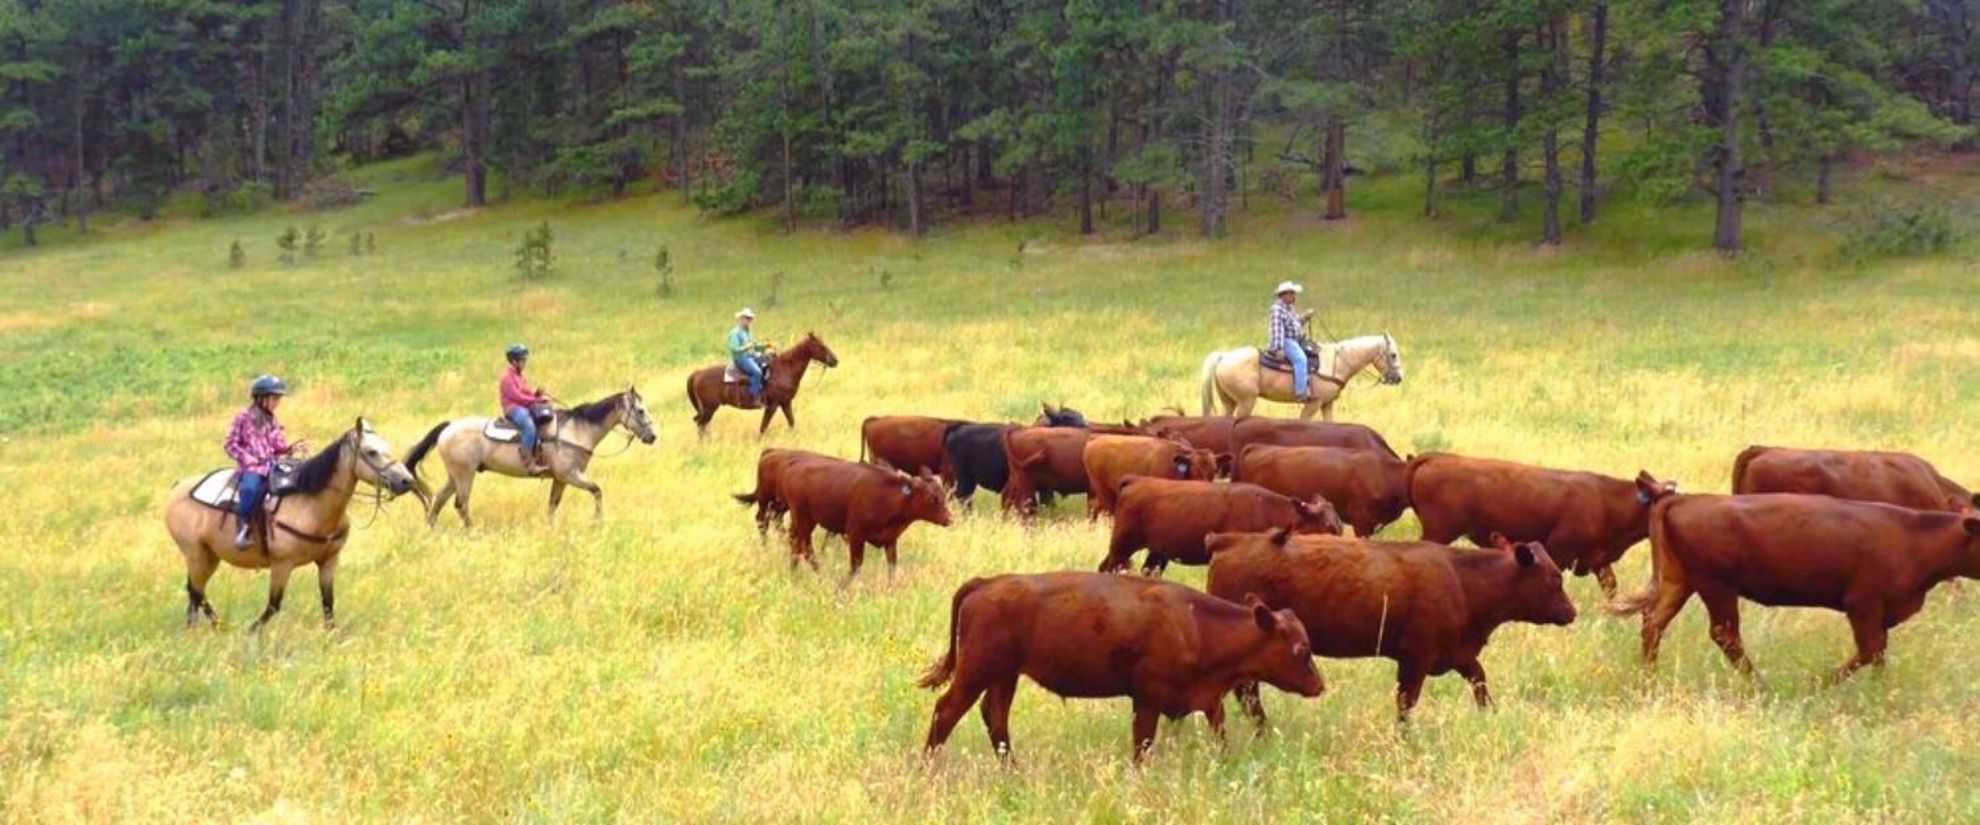 horseback riding the hills of colorado